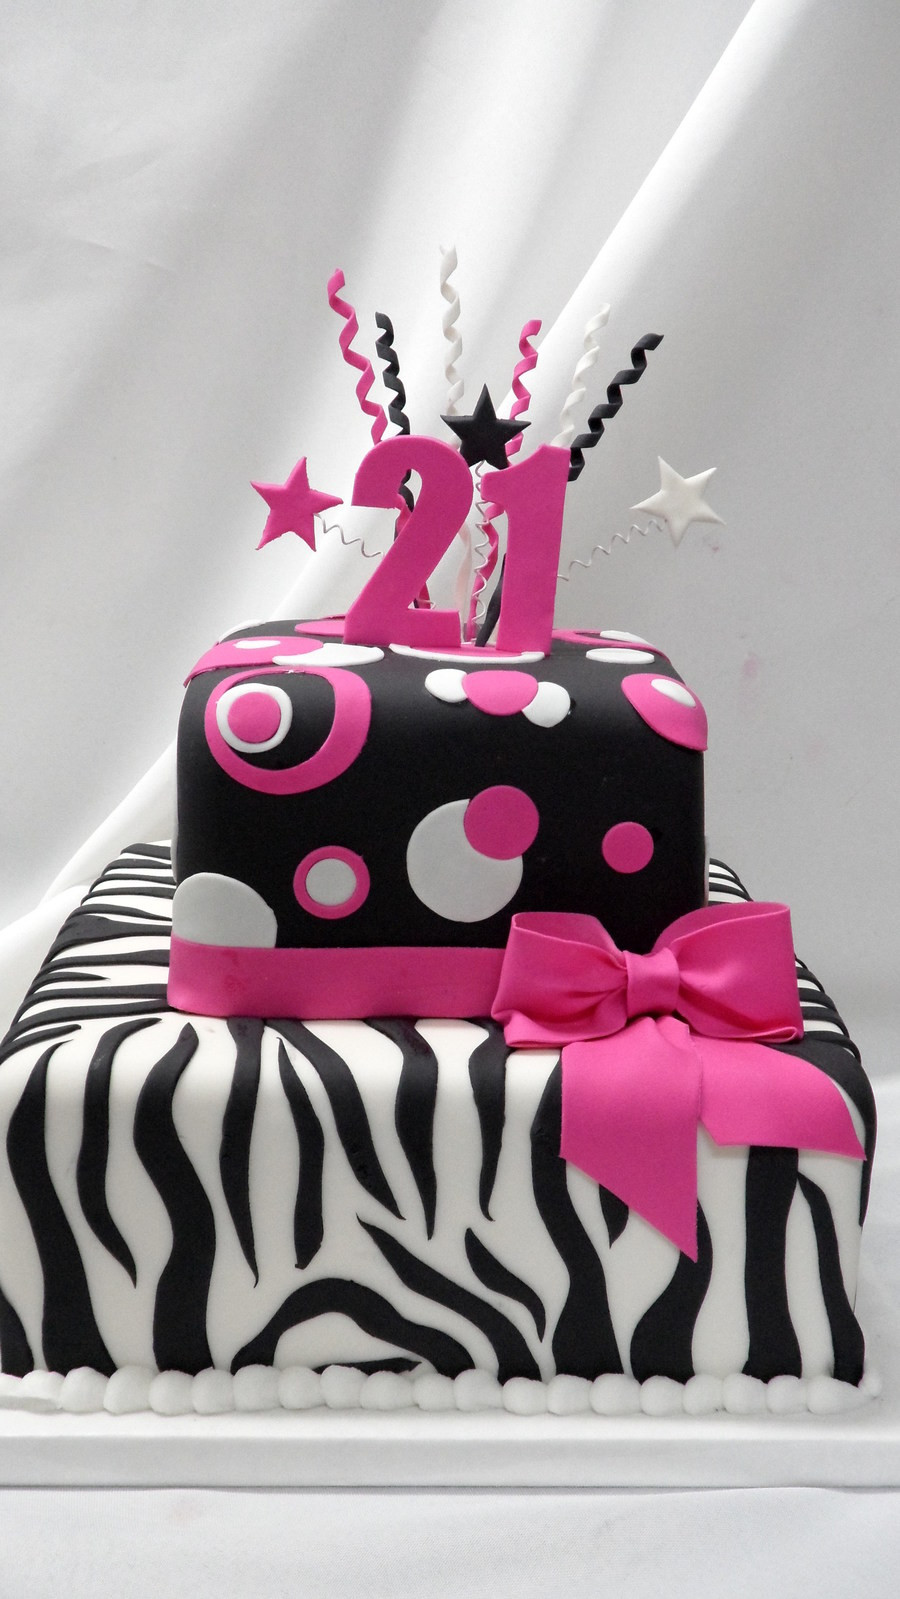 21st Birthday Cakes
 10 Best 21st birthday cake designs CakenGifts